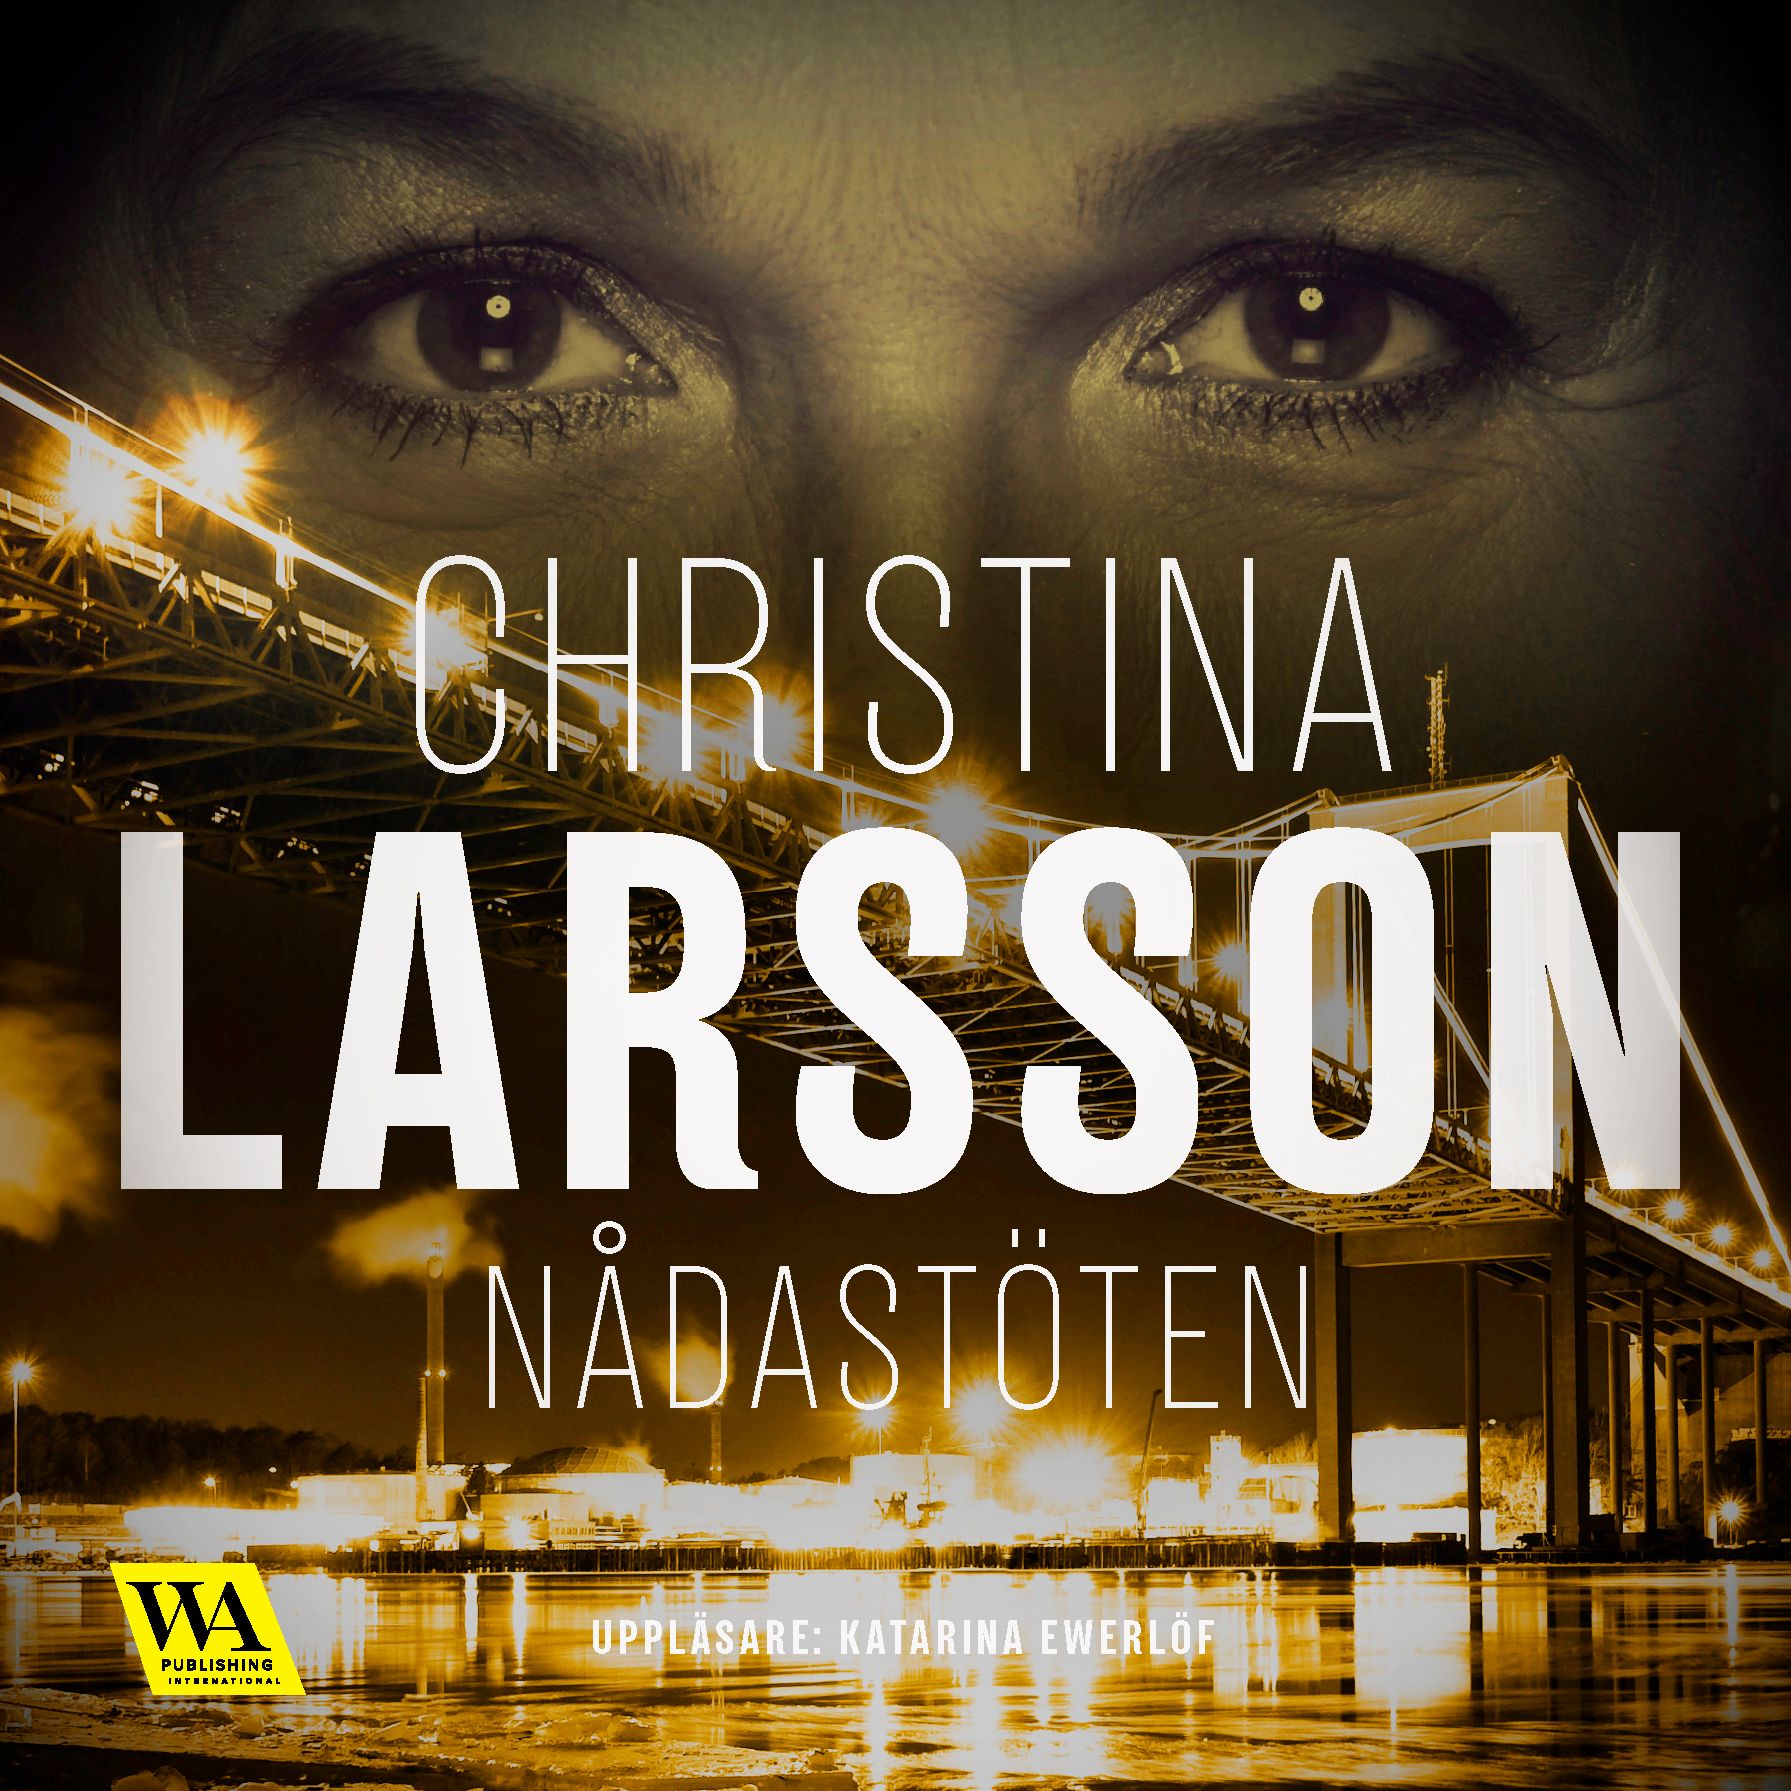 Nådastöten, audiobook by Christina Larsson